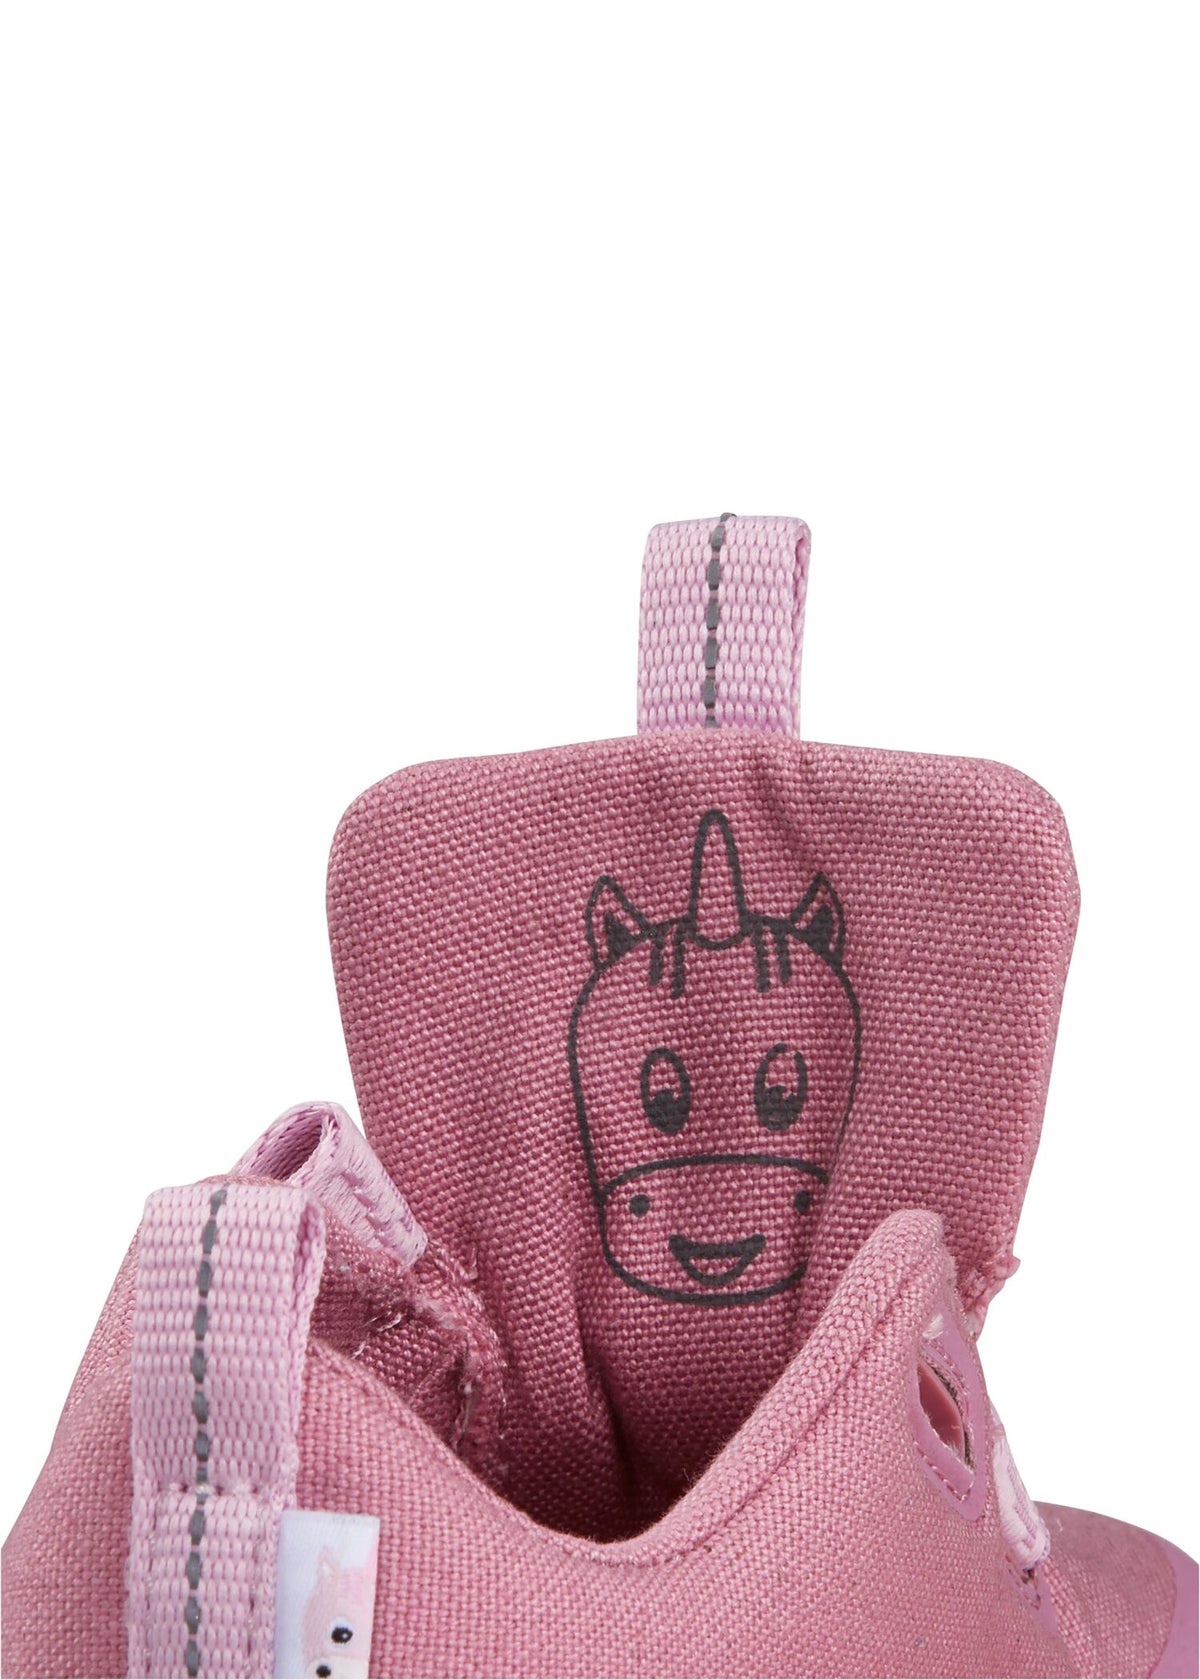 Barfotasneakers för barn - Cotton Lucky, Unicorn, rosa, vegan